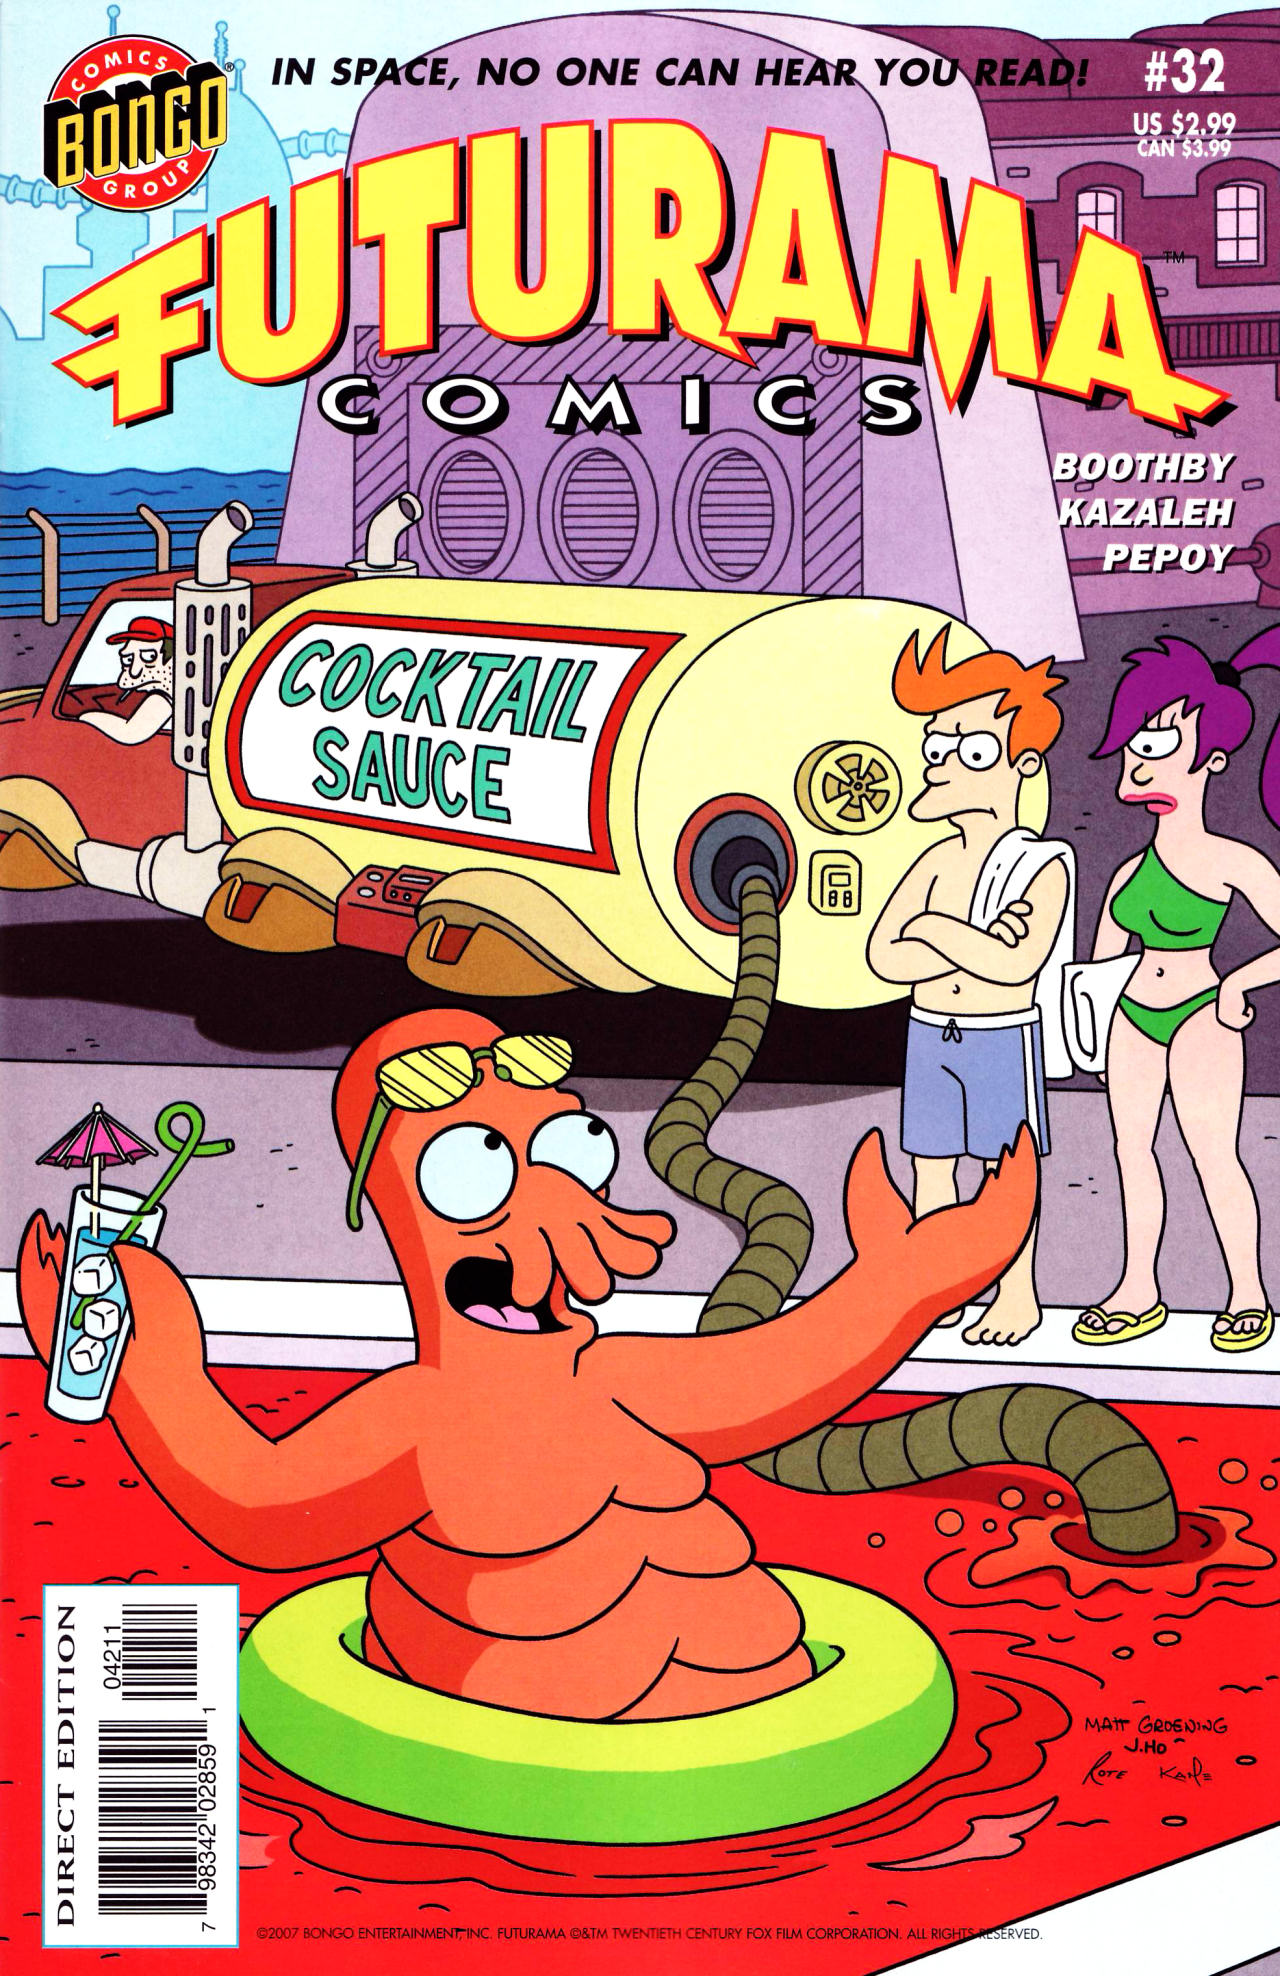 Futurama Comics Issue 32 | Read Futurama Comics Issue 32 comic online in  high quality. Read Full Comic online for free - Read comics online in high  quality .|viewcomiconline.com